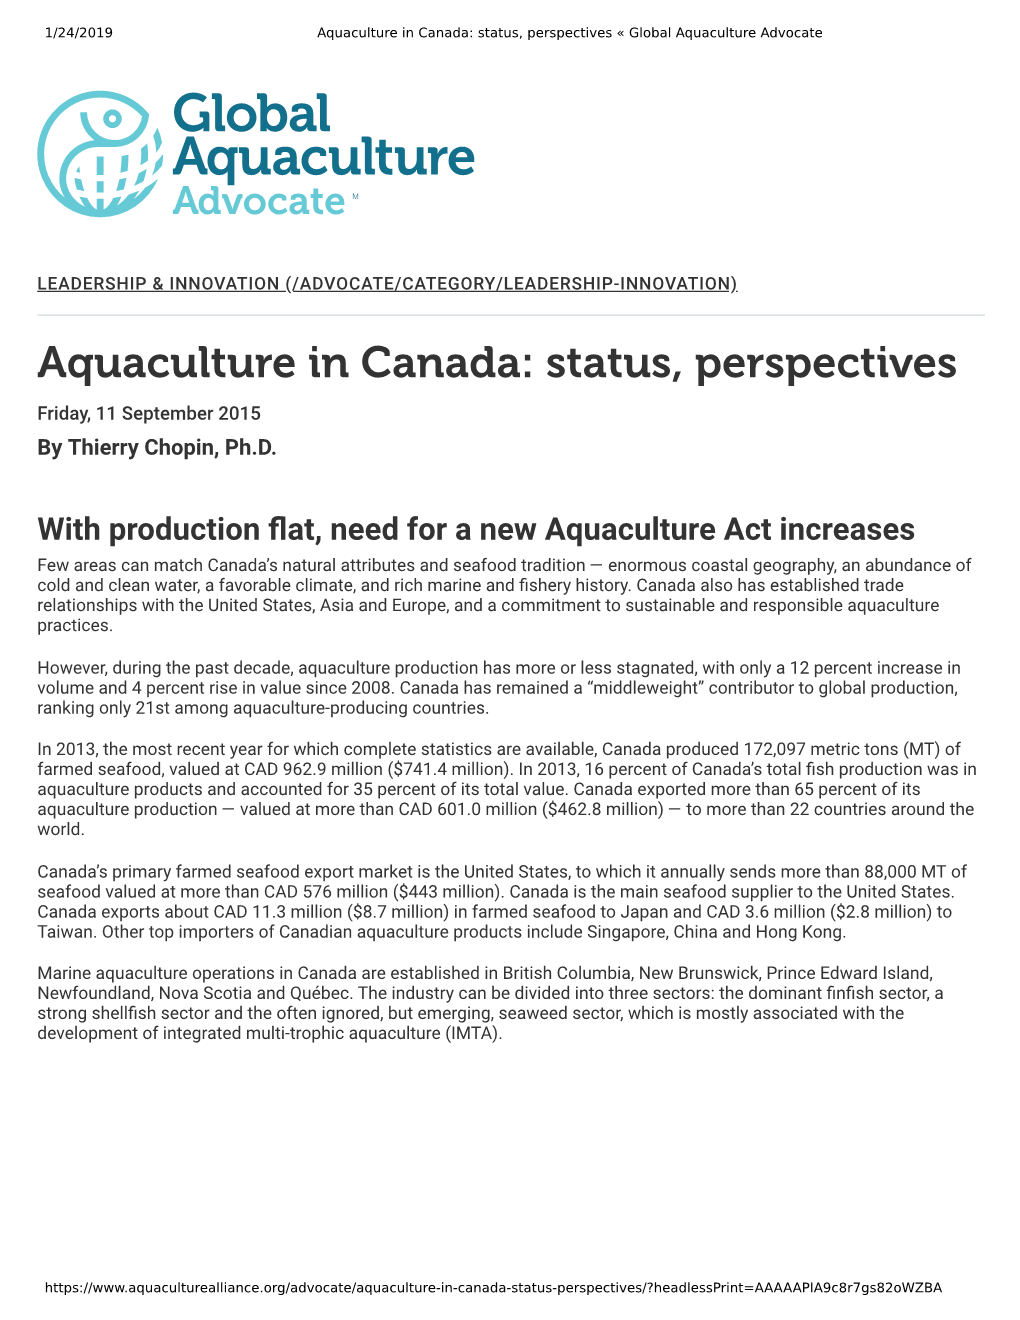 Aquaculture in Canada: Status, Perspectives « Global Aquaculture Advocate